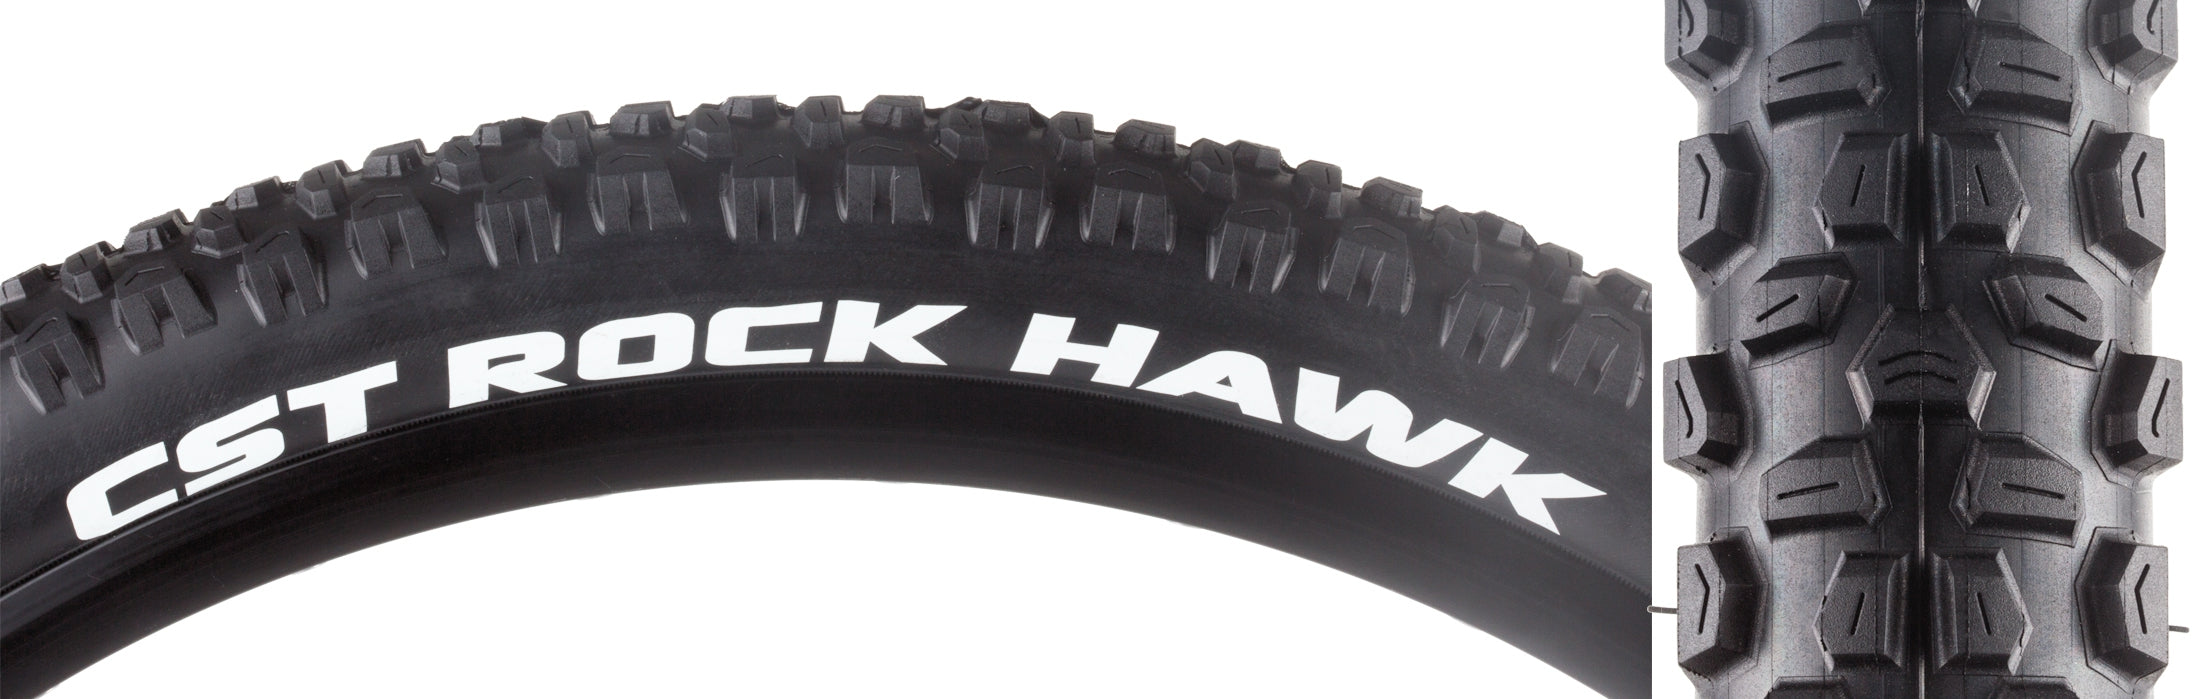 CST Rock Hawk Tire - 26 x 2.25, Clincher, Wire, Black